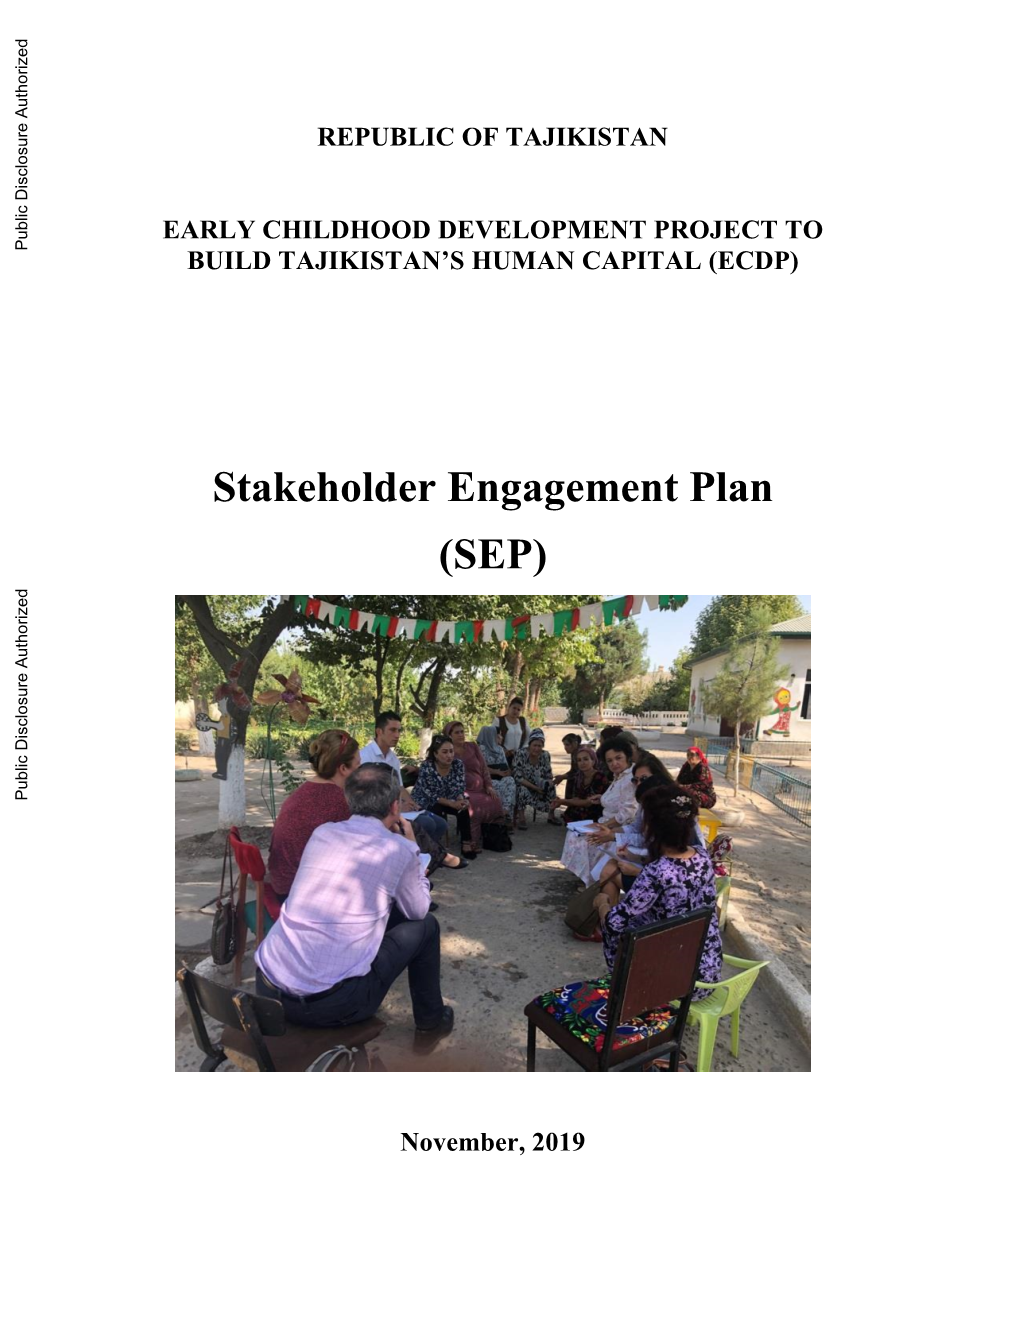 Stakeholder Engagement Plan Public Disclosure Authorized (SEP) Public Disclosure Authorized